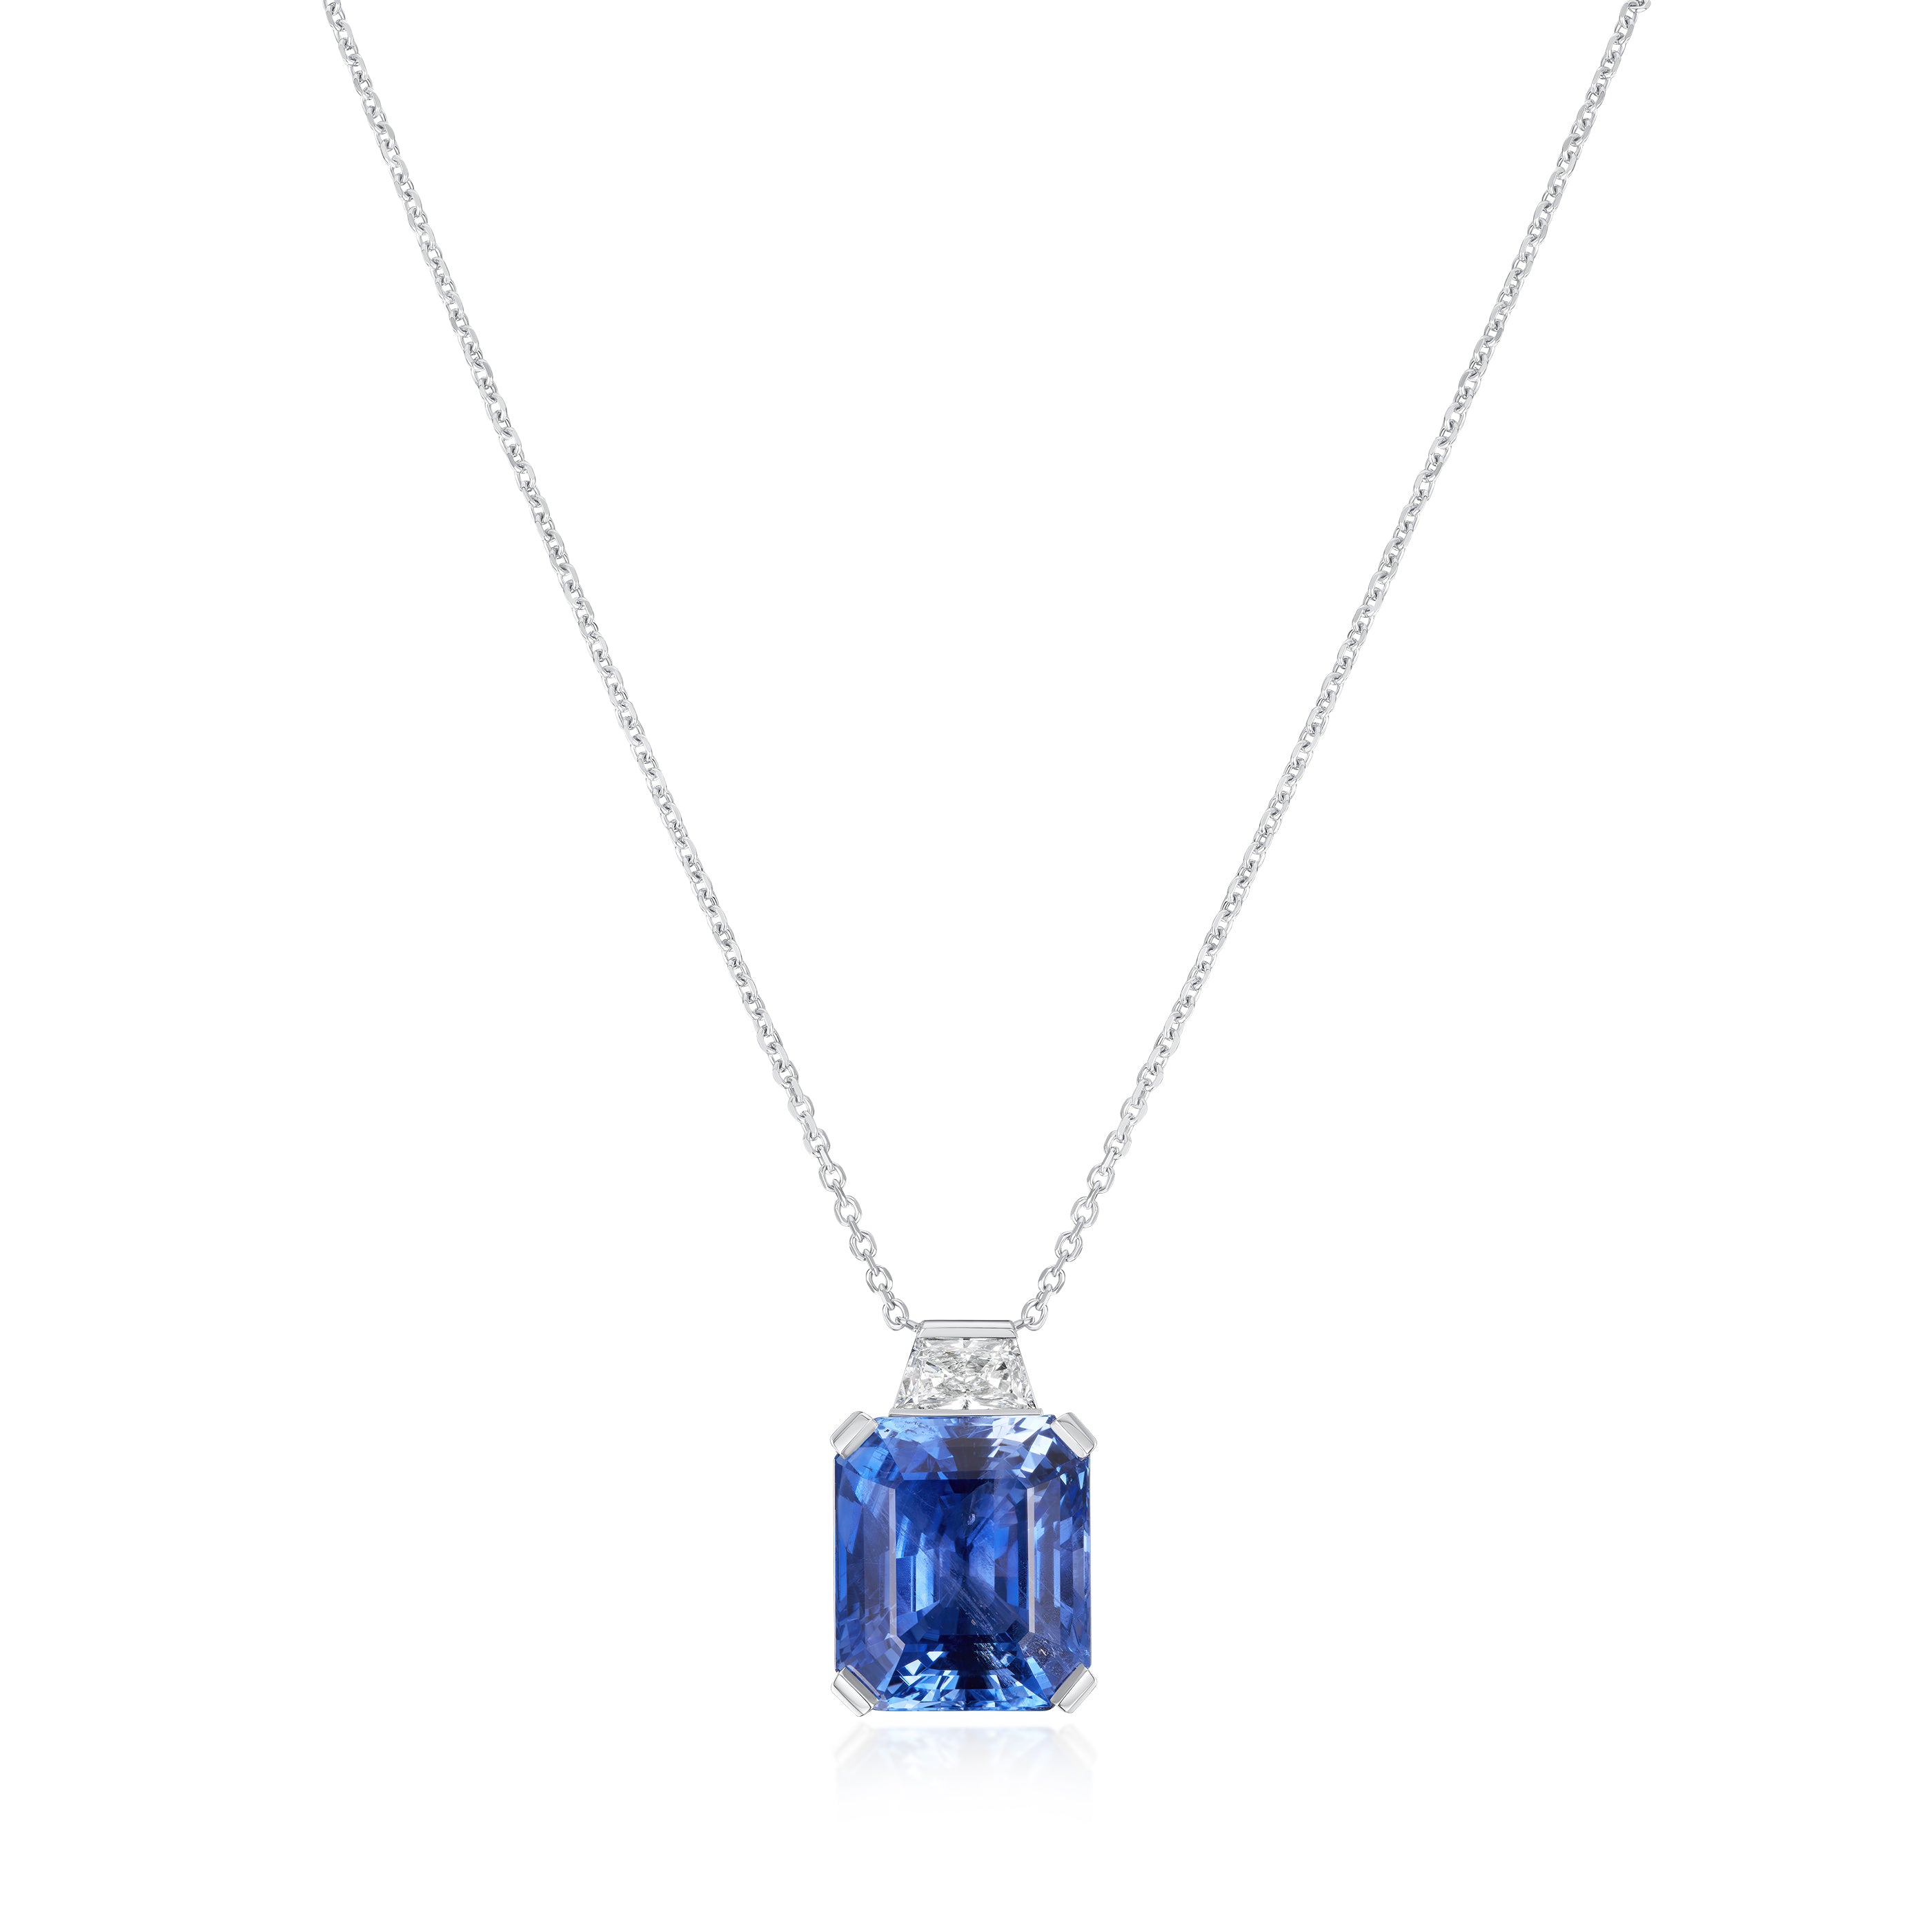 18.76cts Octagon Sapphire pendant